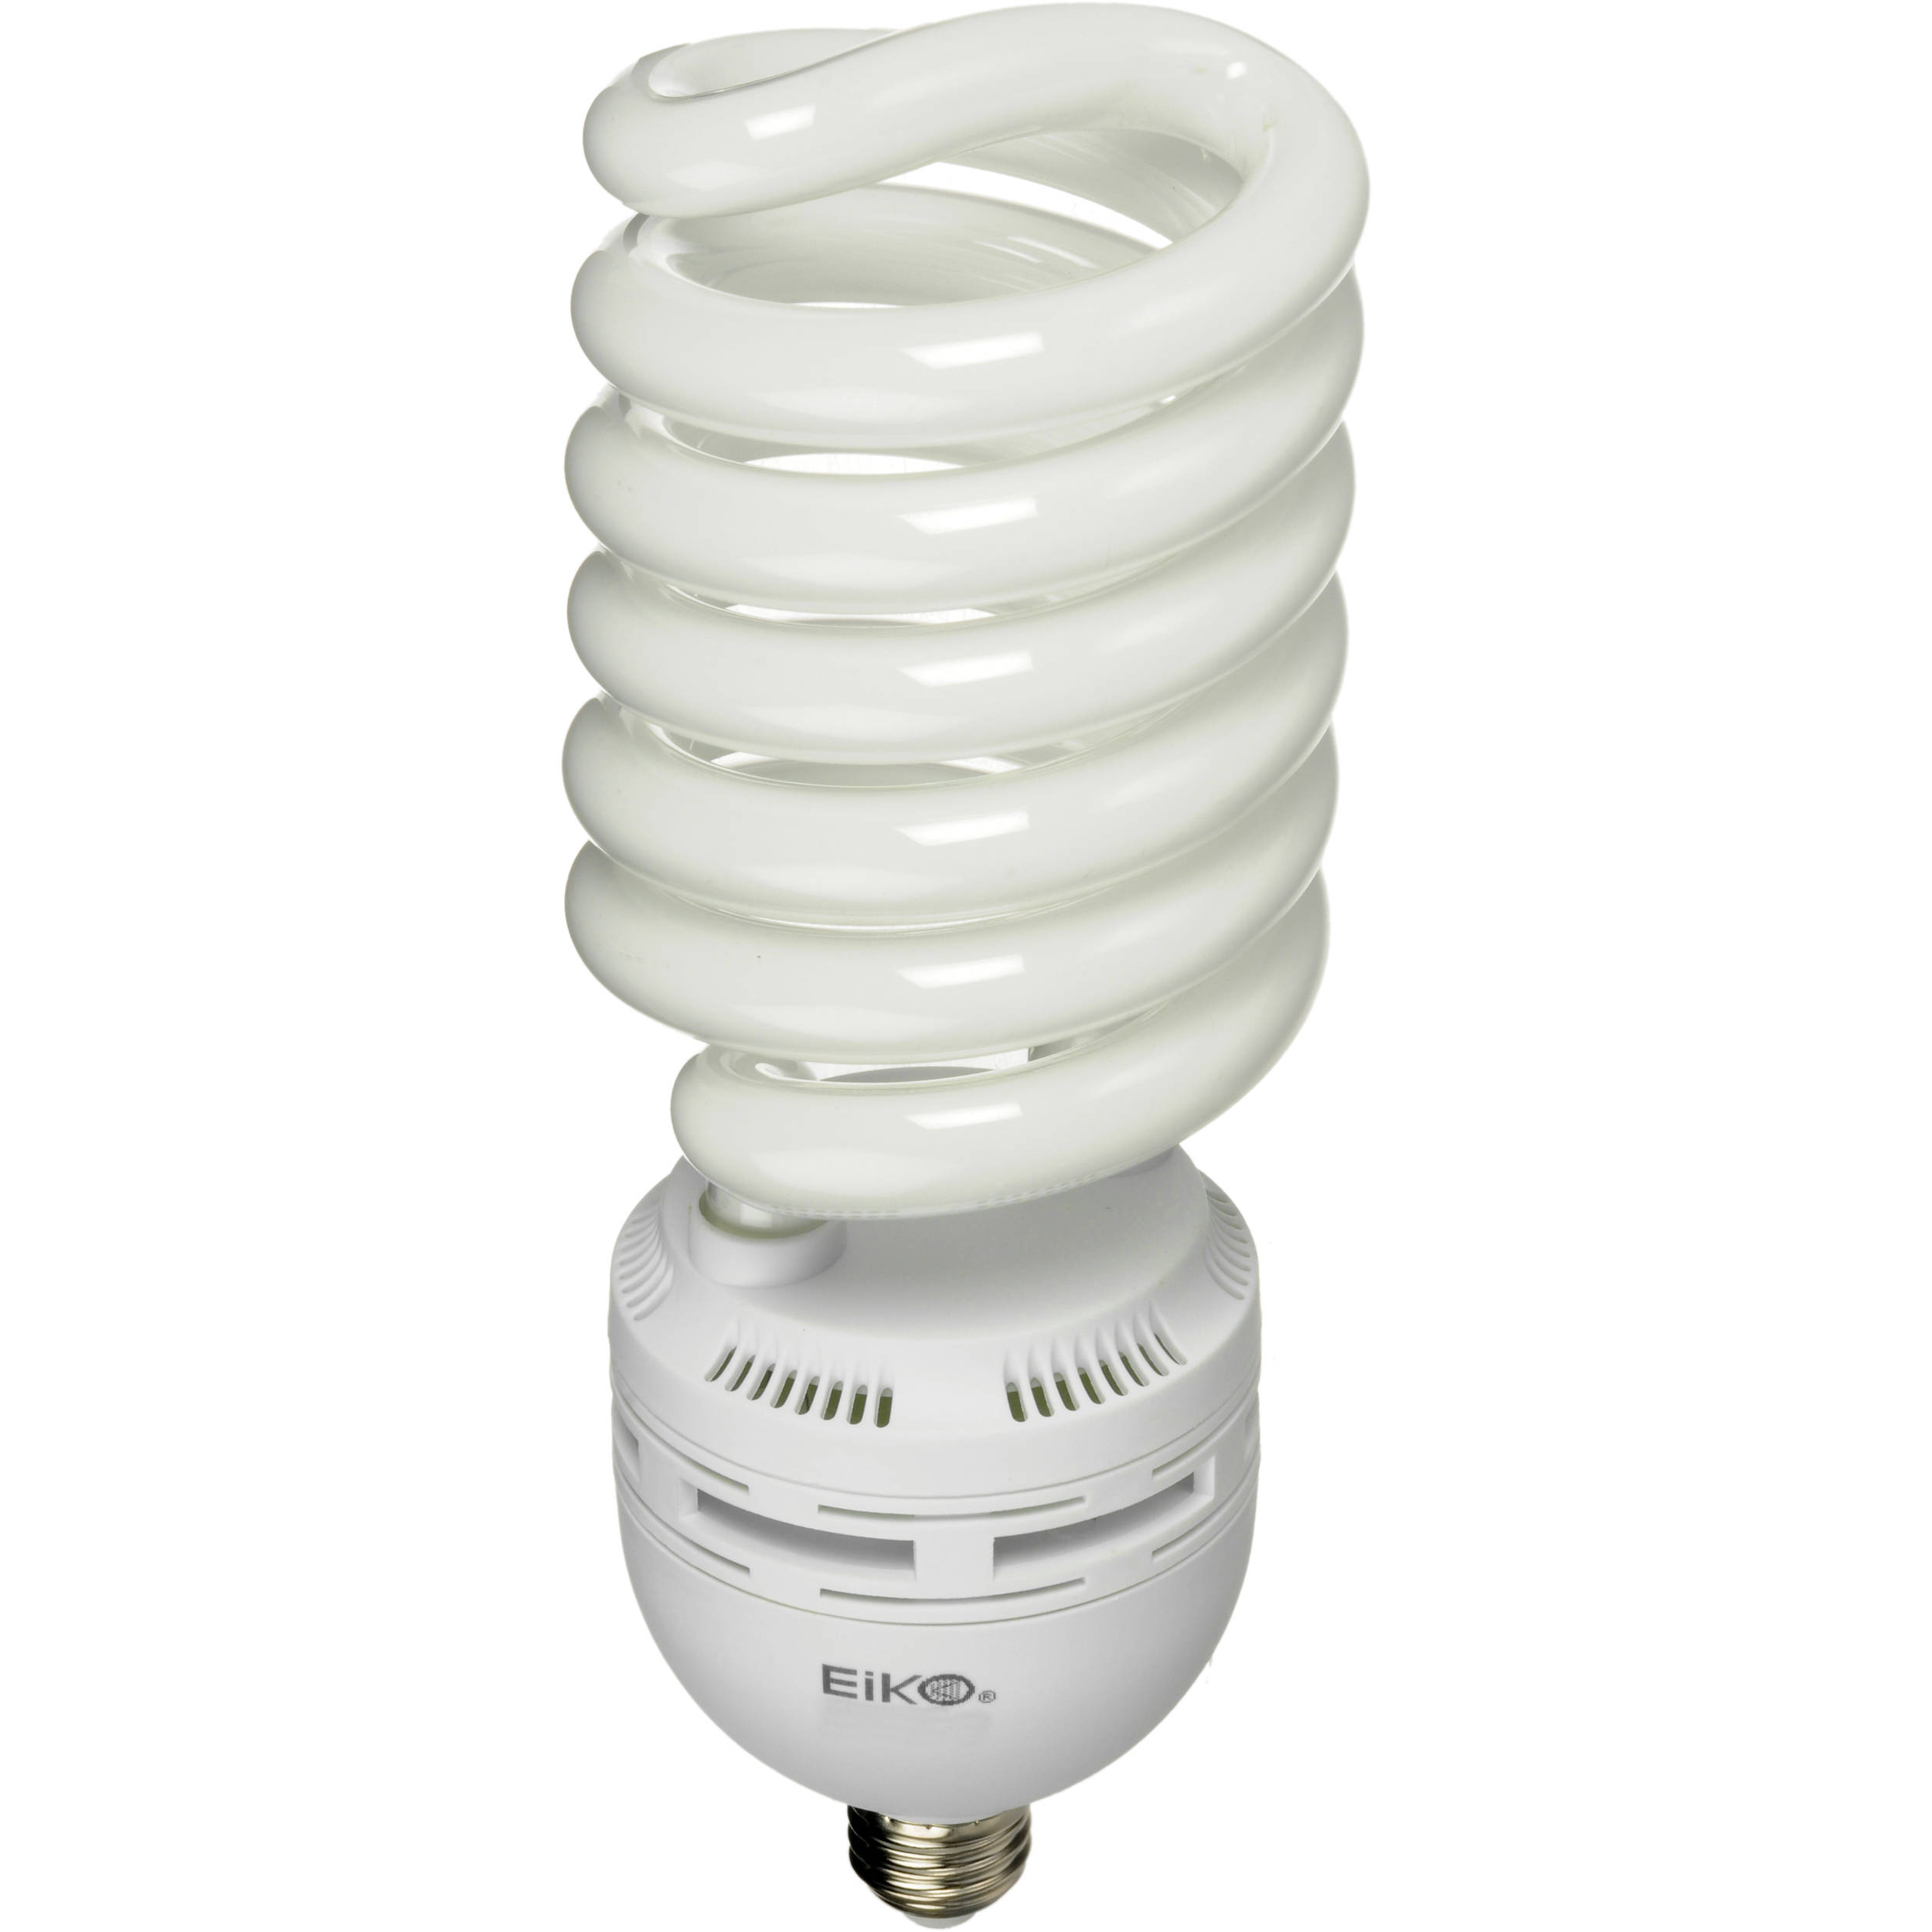 Eiko Spiral Fluorescent Lamp (105W / 120V) SP105/50/MED B&H